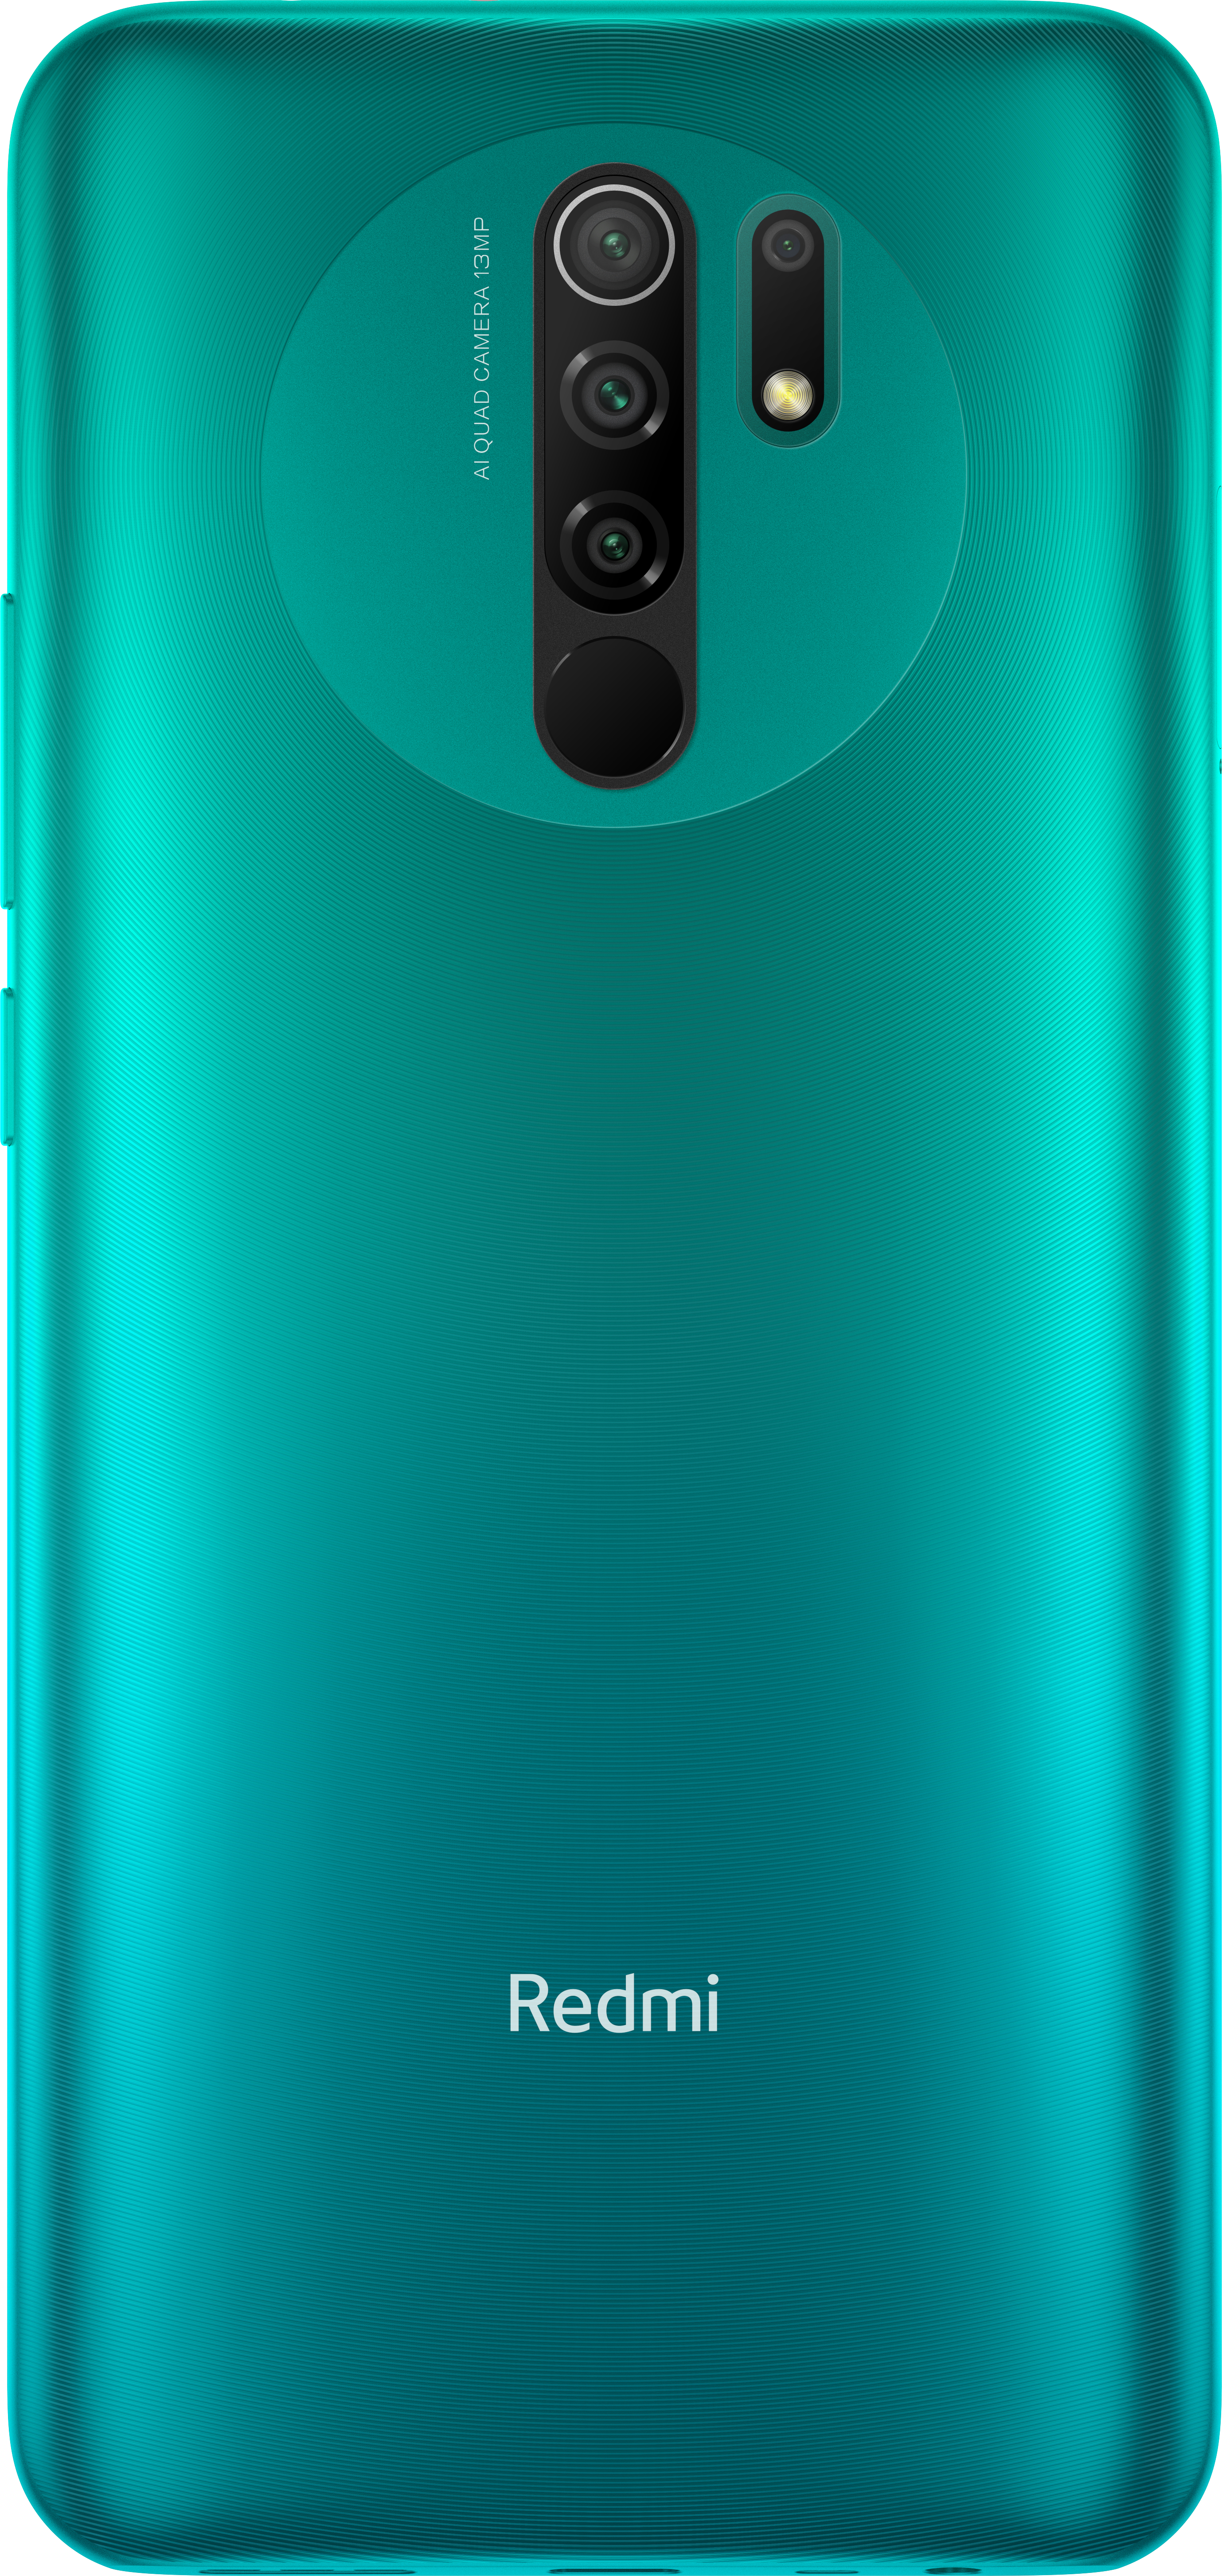 Green Dual 64 GB XIAOMI REDMI SIM 9 Ocean